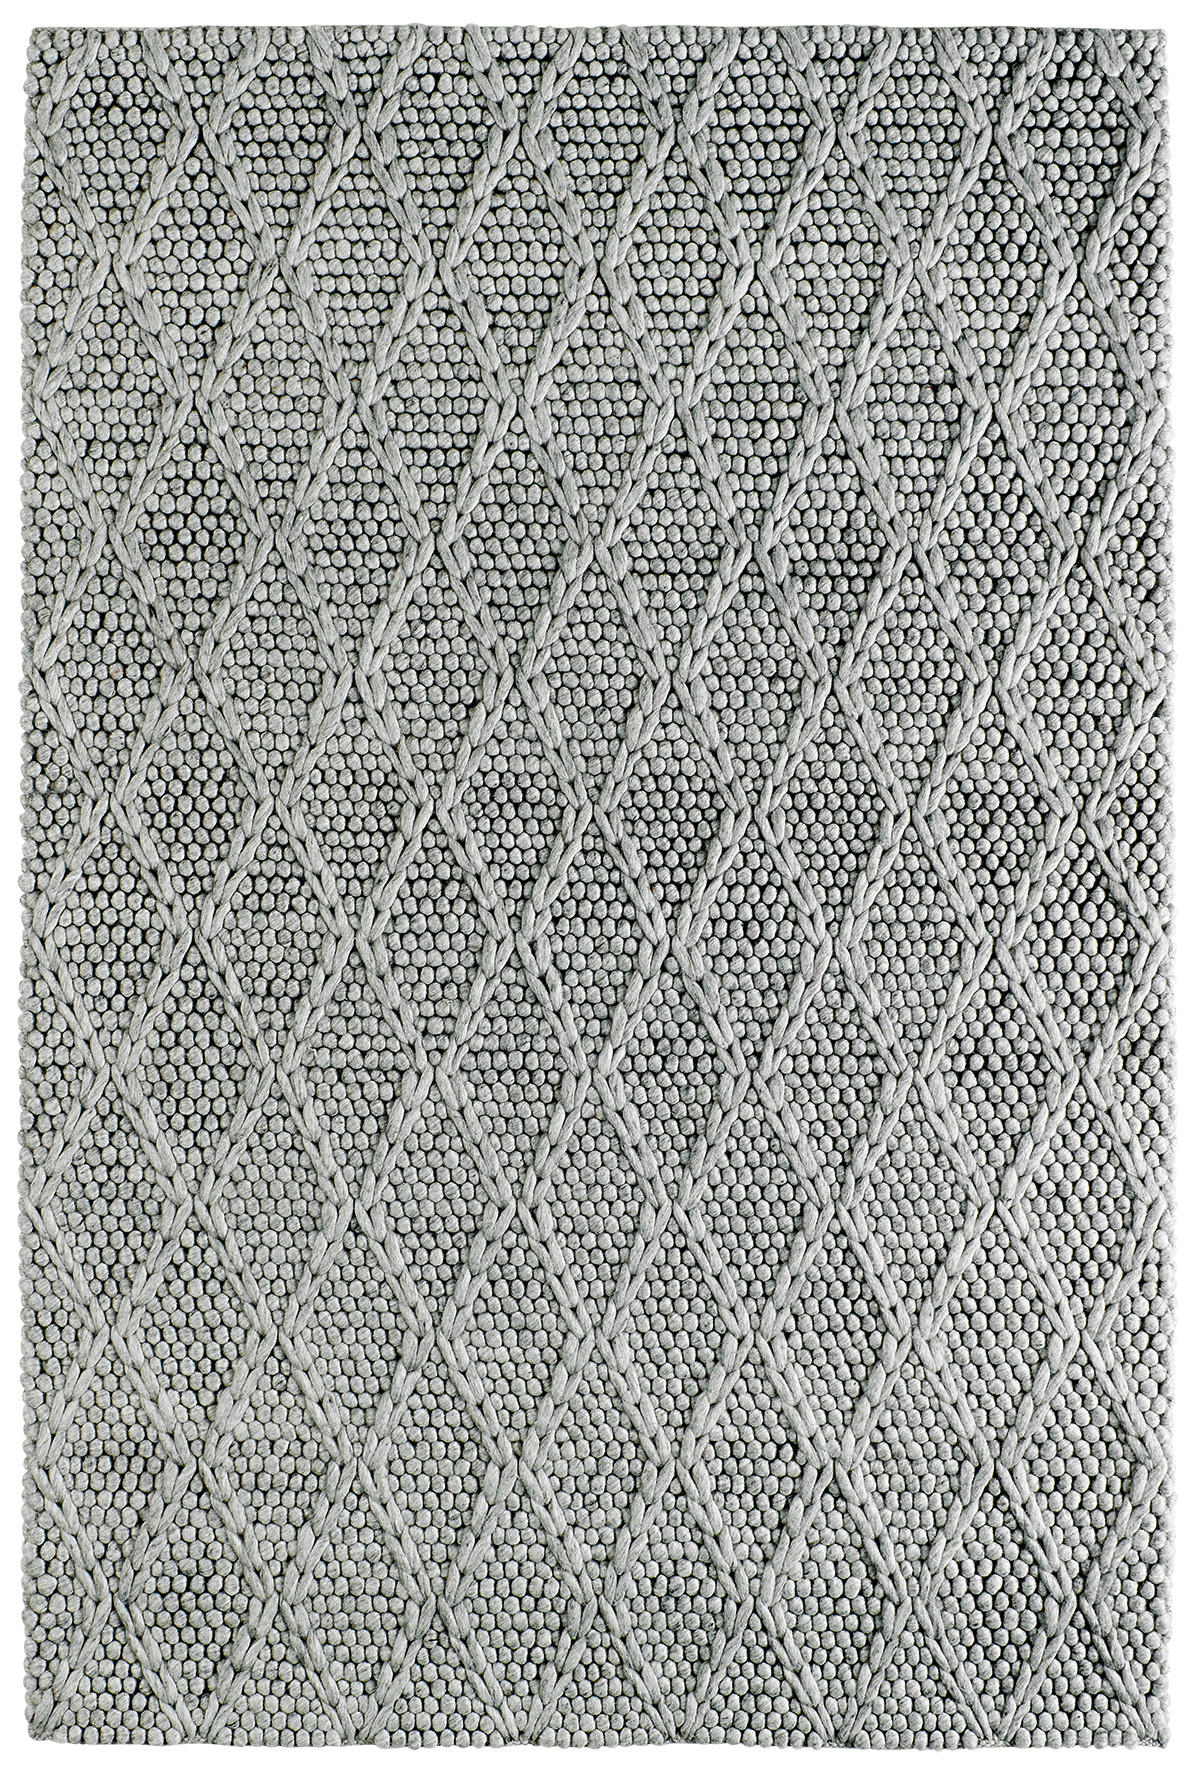 HANDWEBTEPPICH 80/150 cm  - Silberfarben, Design, Textil (80/150cm) - Linea Natura